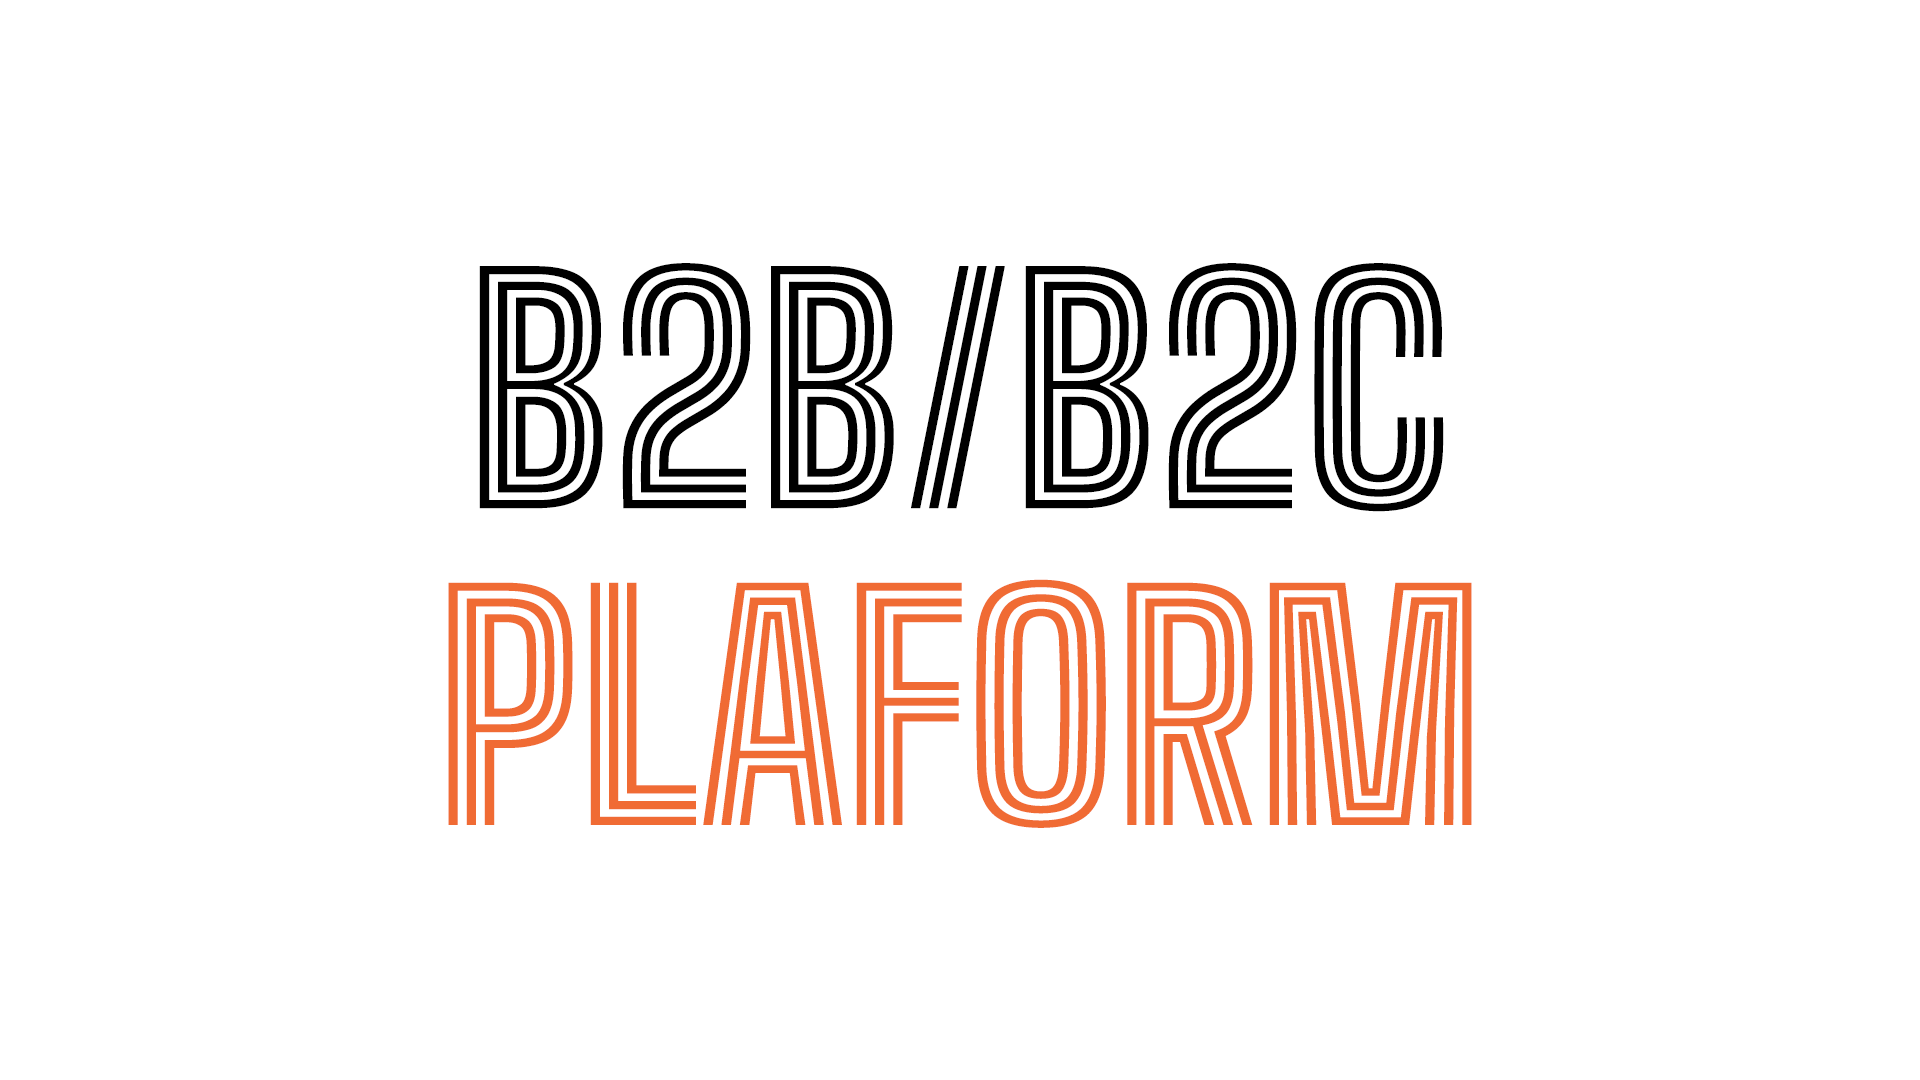 Efficient and Fast B2B/B2C Platform for an International Food Brand